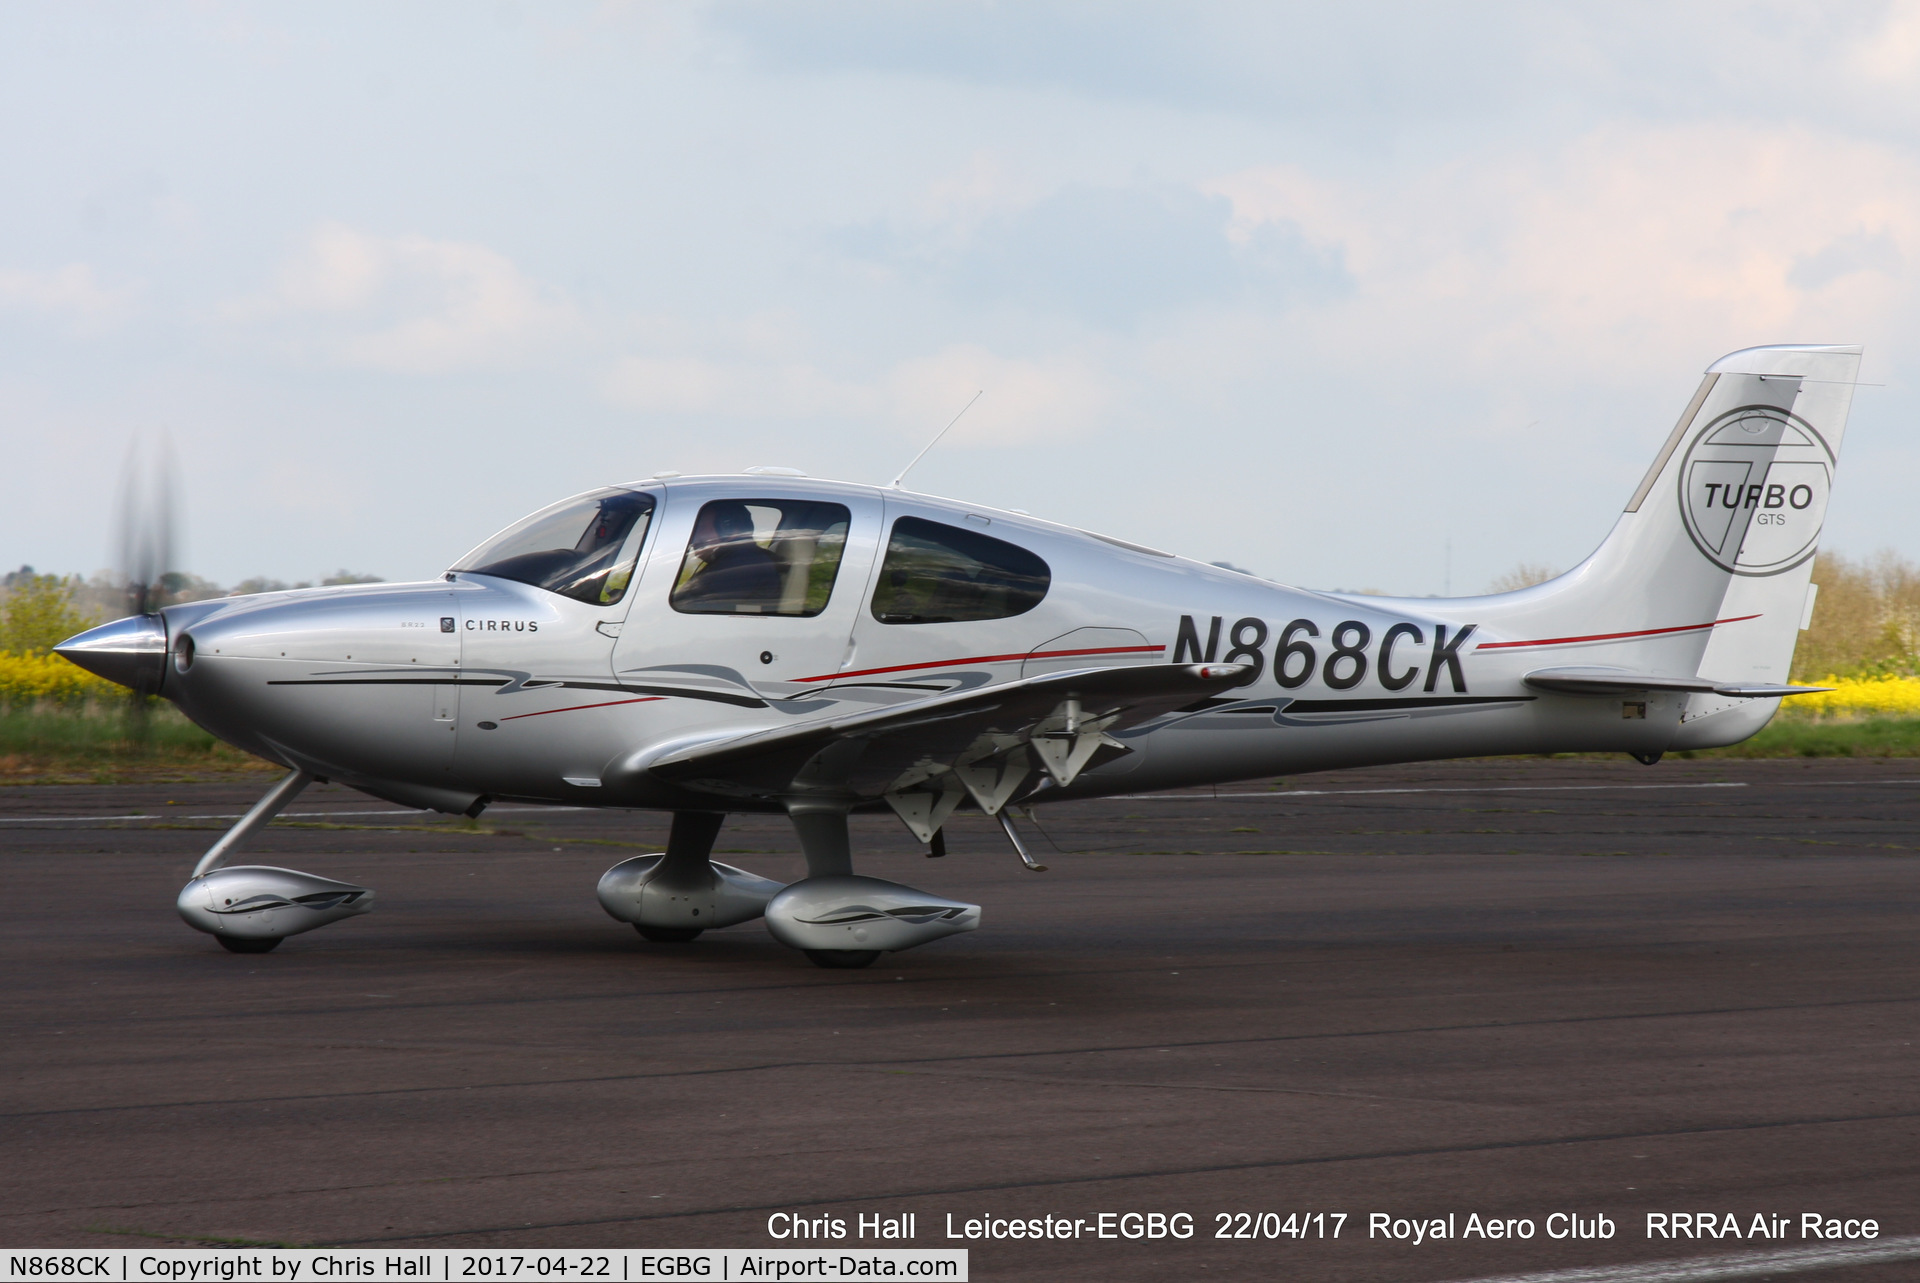 N868CK, 2009 Cirrus SR22T GTS Turbo C/N 3412, Royal Aero Club 3R's air race